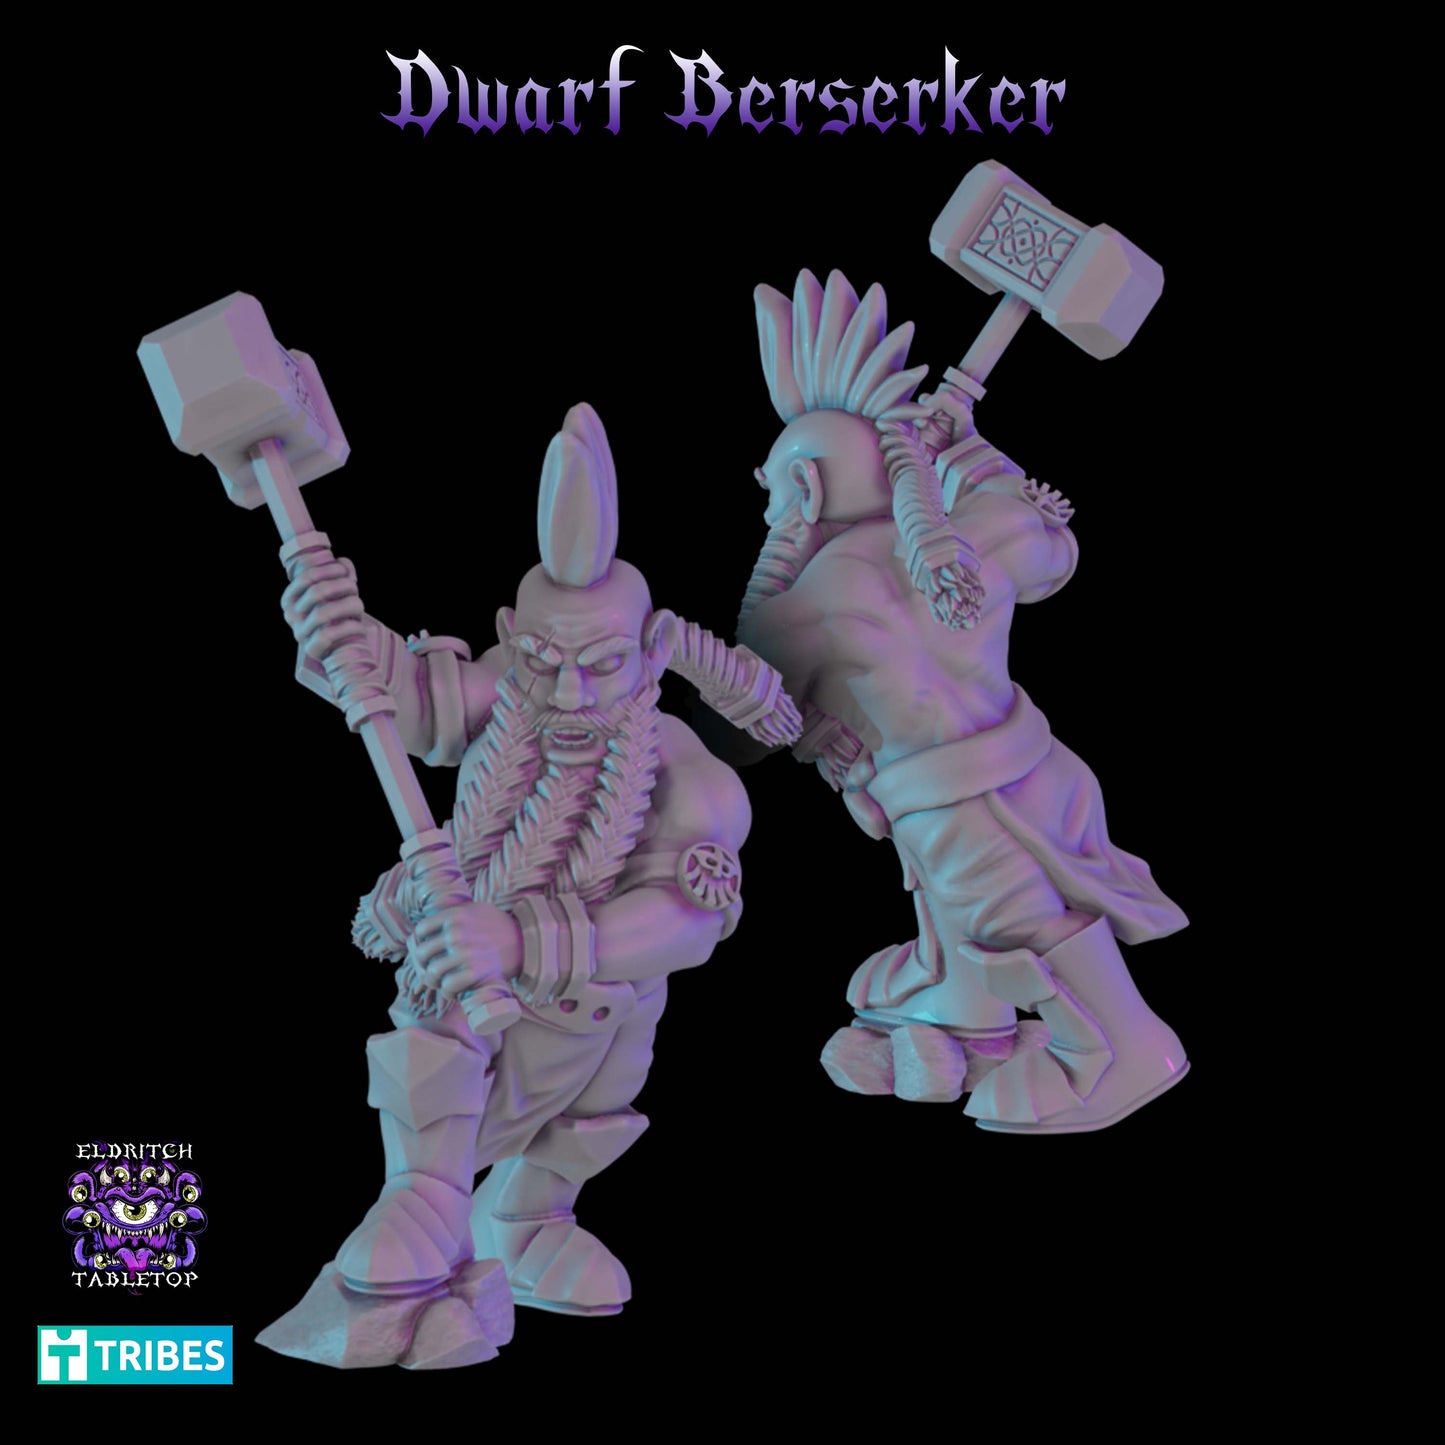 Dwarf Berserker